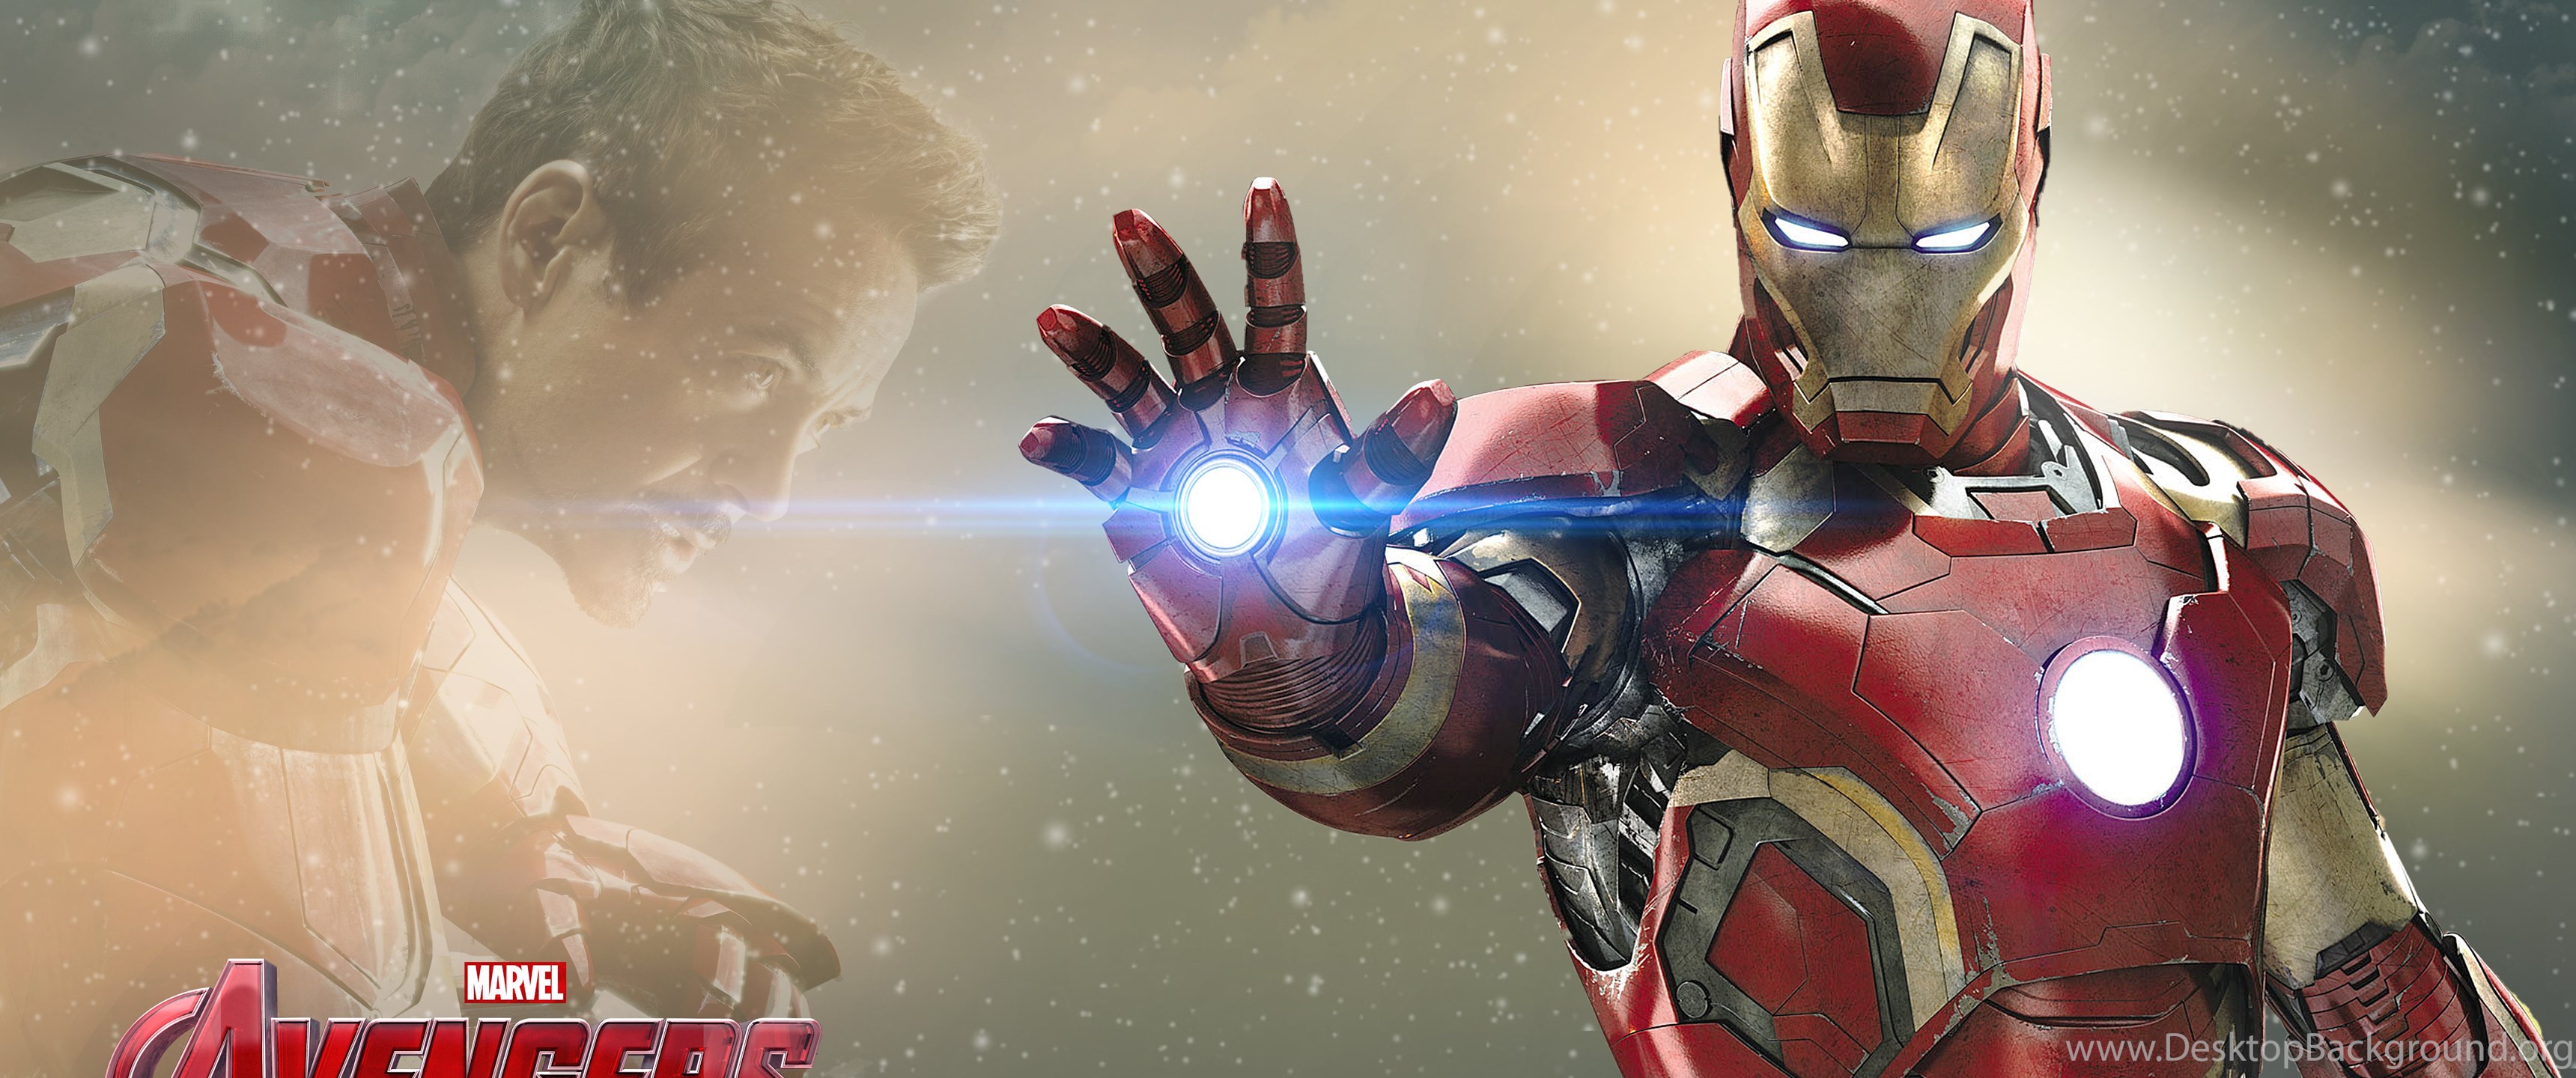 Iron Man Avengers Wallpaper Uncalke Desktop Background